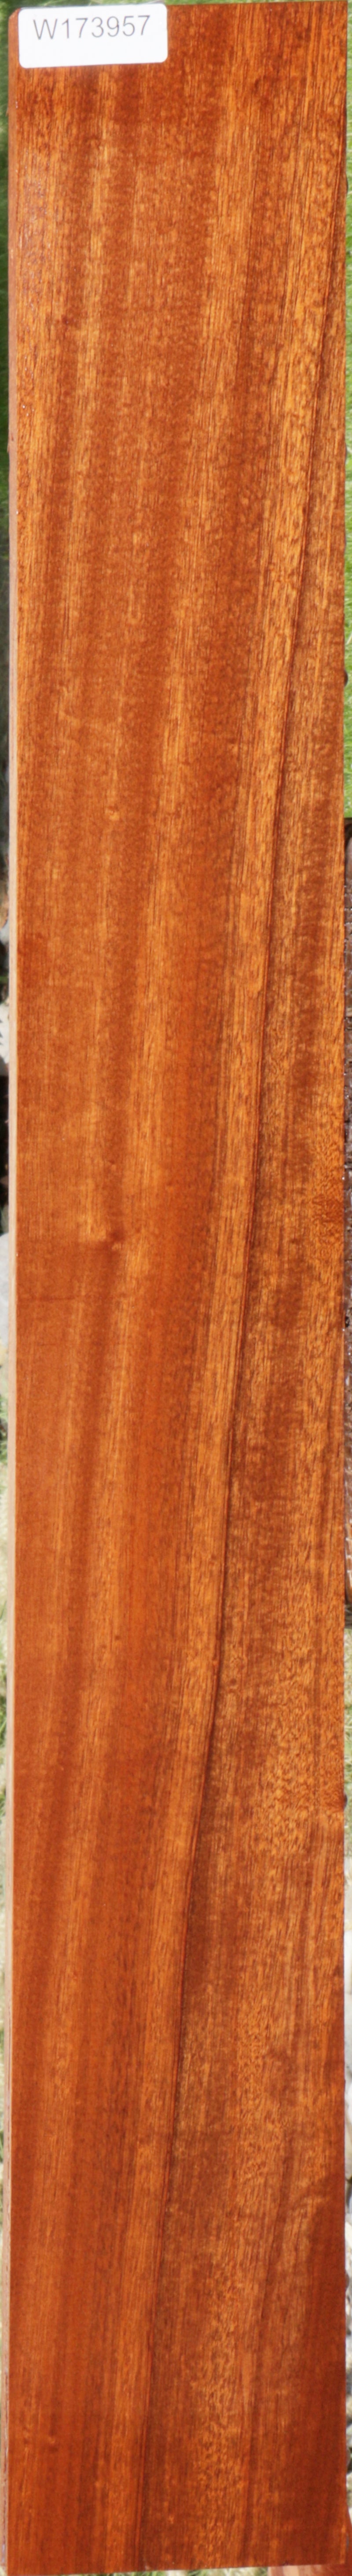 Sapele Micro Lumber